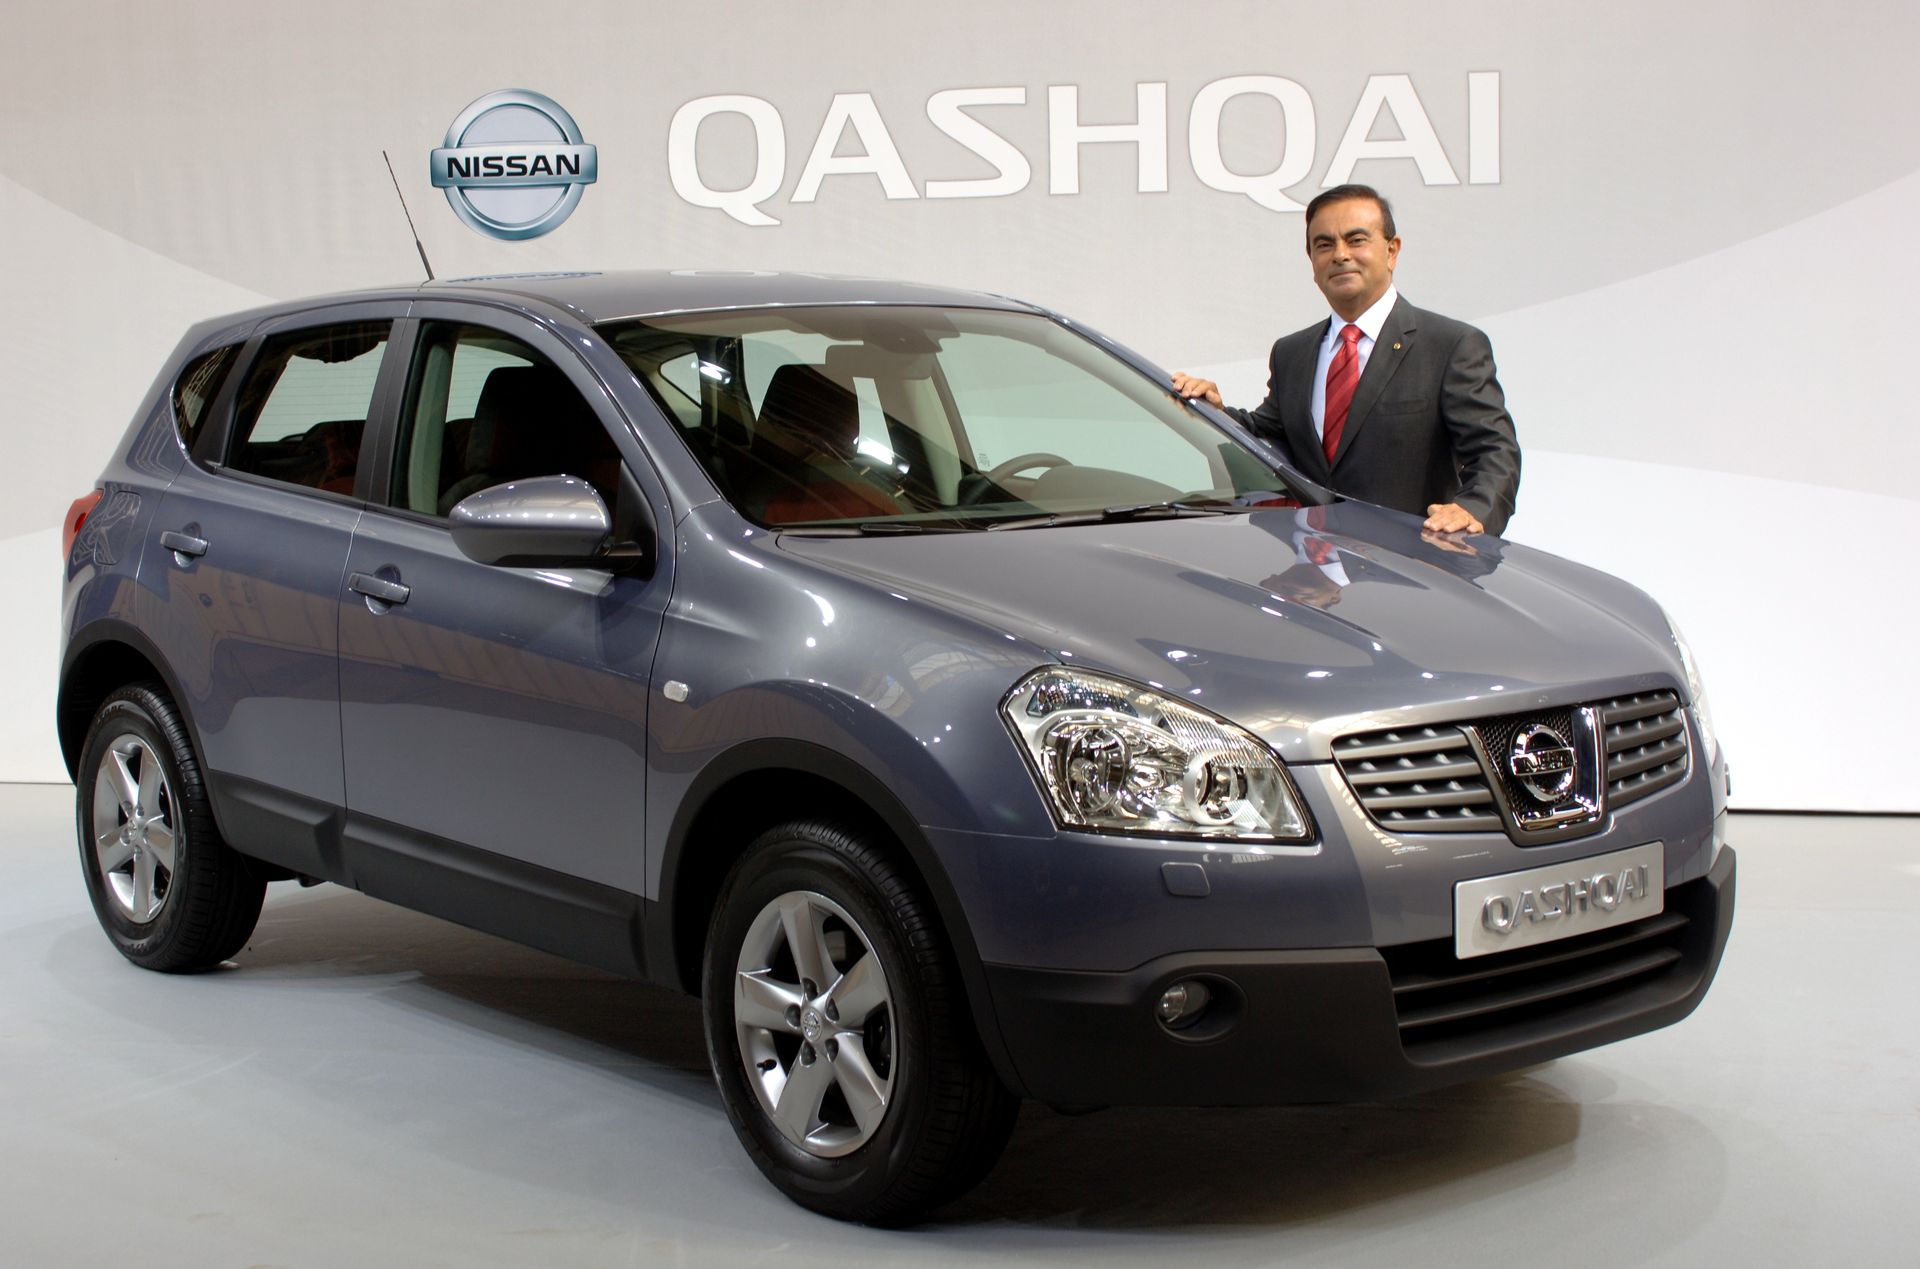 Nissan Qashqai 2006 Carlos Ghosn